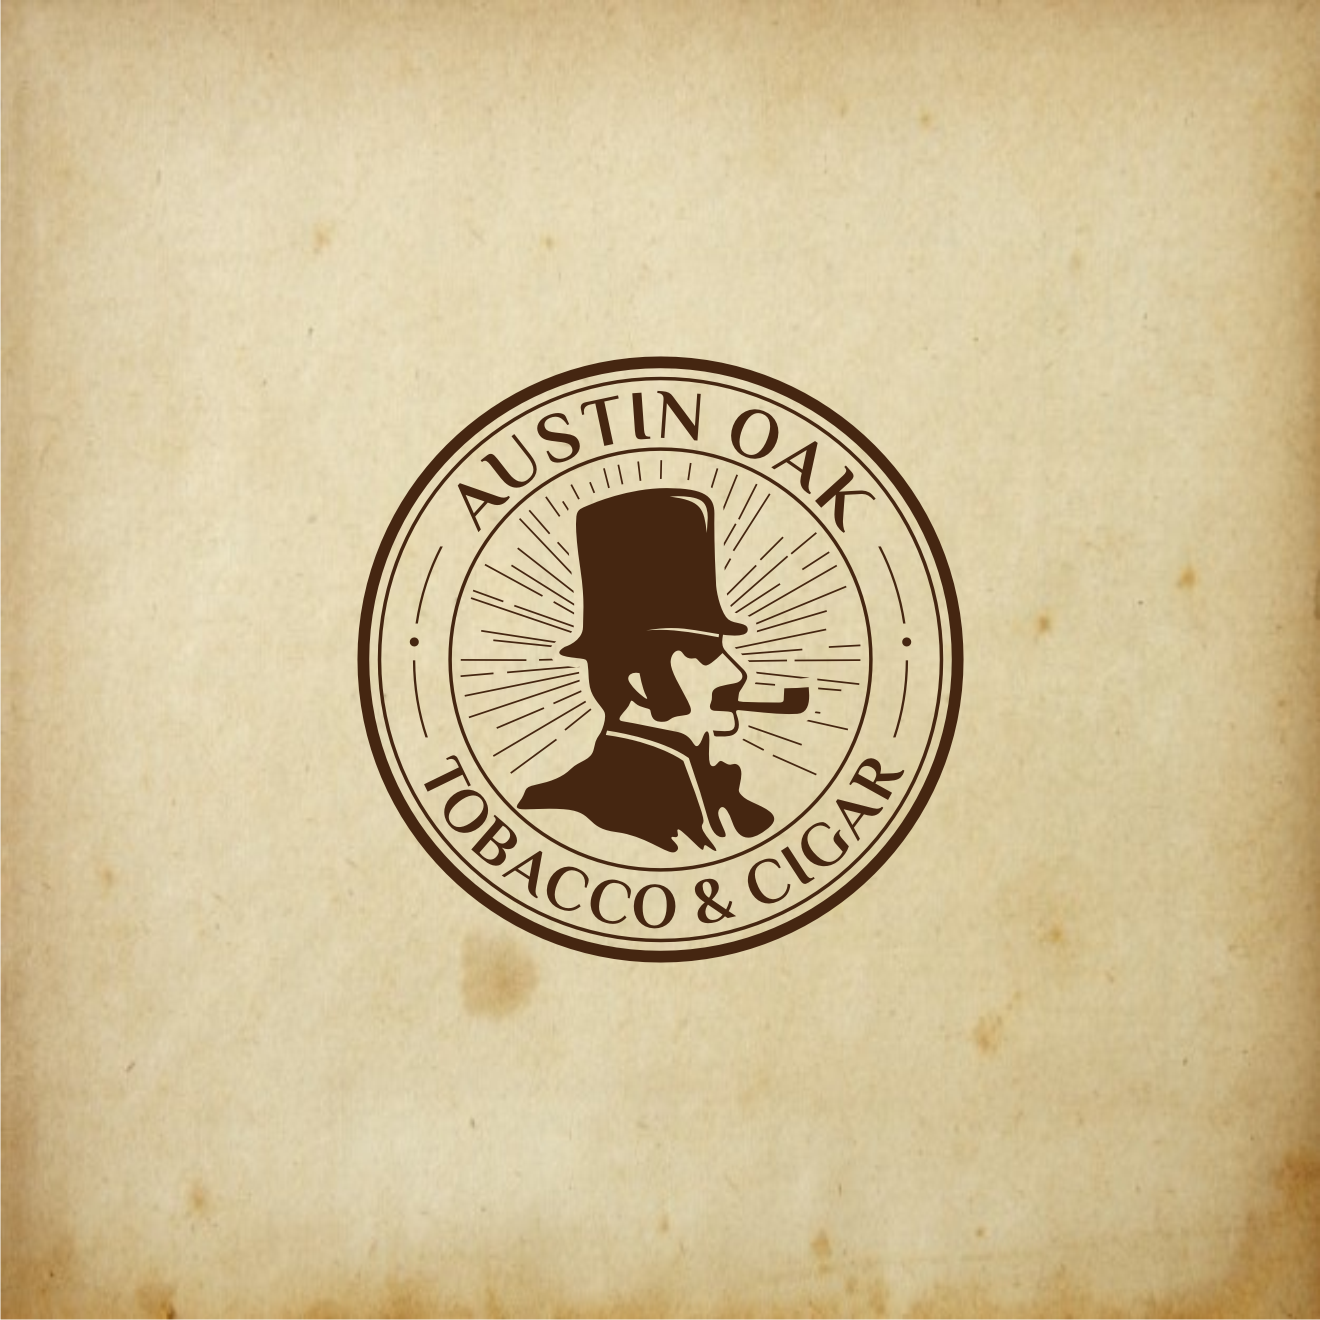 Traditional, Masculine, Tobacco Logo Design for Austin Oak.